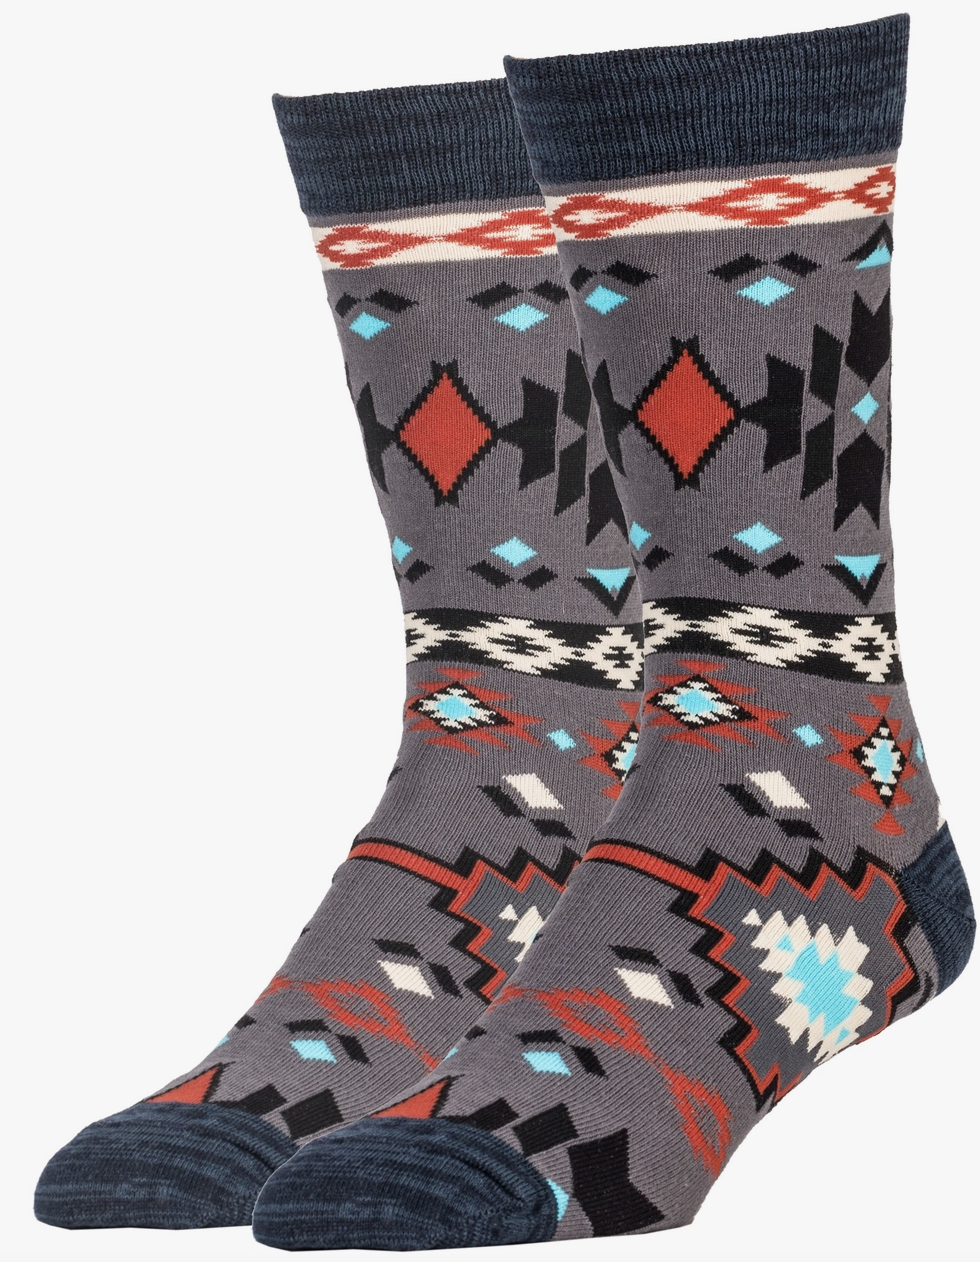 Men's "Cascara Sagrada" Novelty Socks